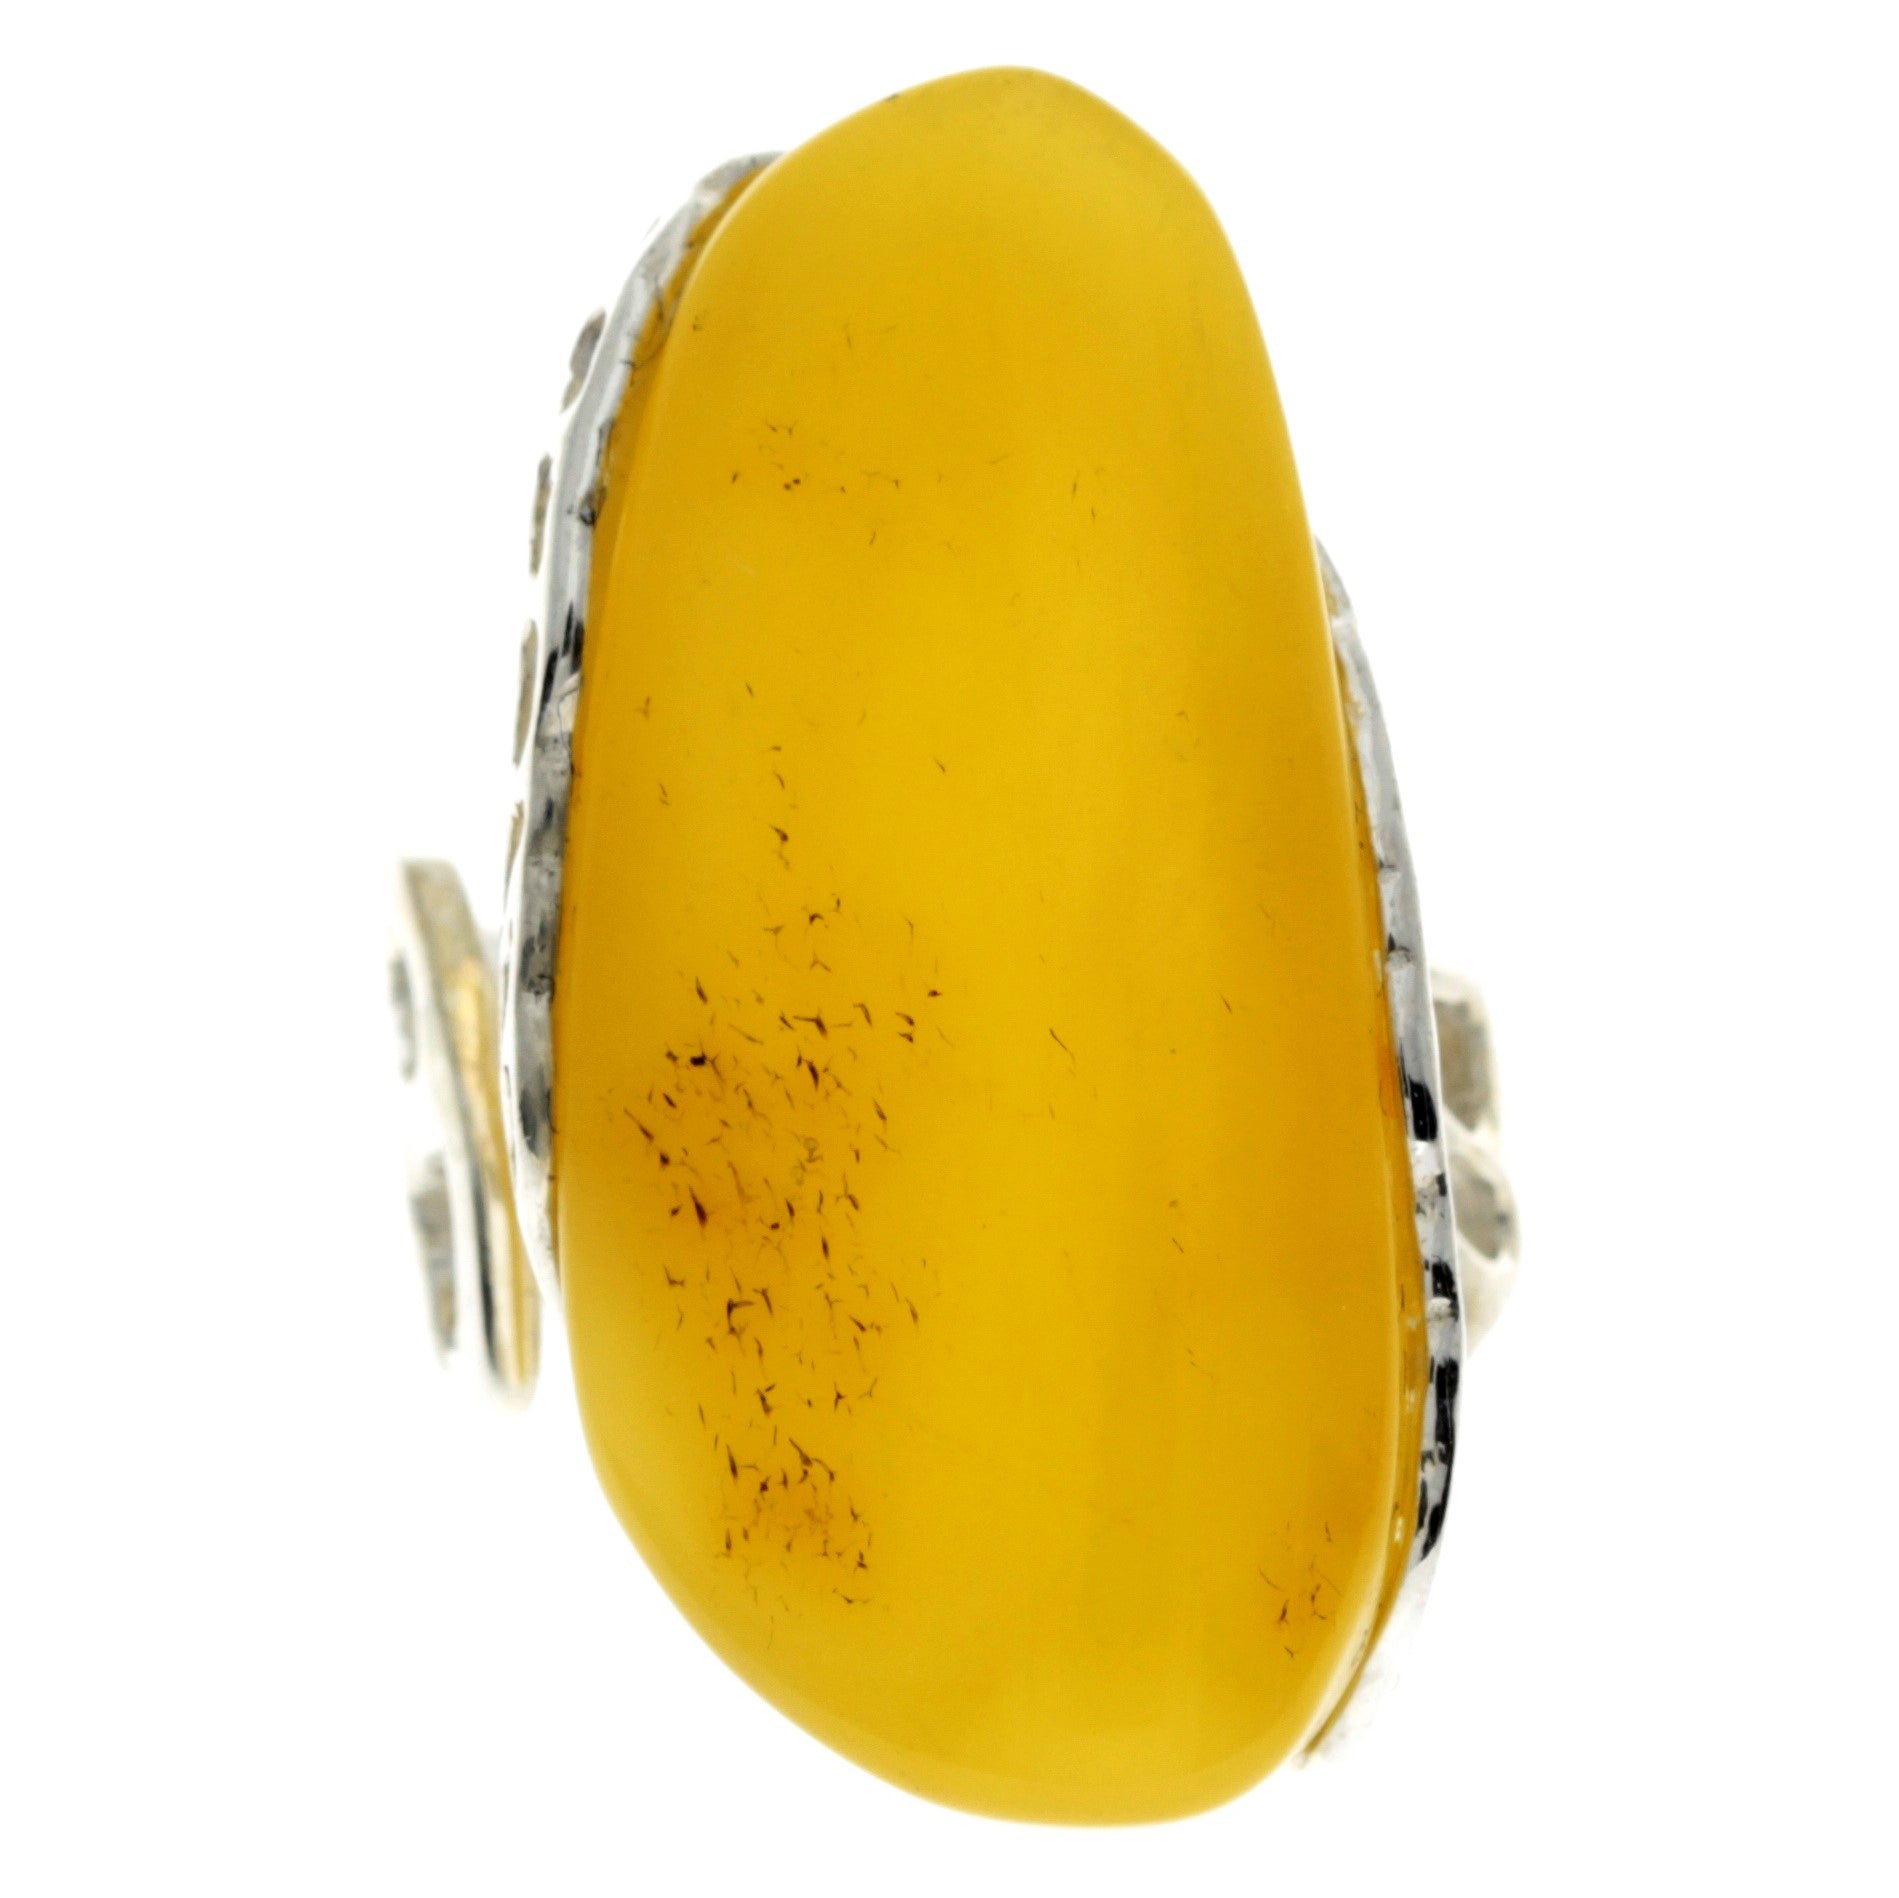 925 Sterling Silver & Genuine Lemon Baltic Amber Unique Ring - RG0688